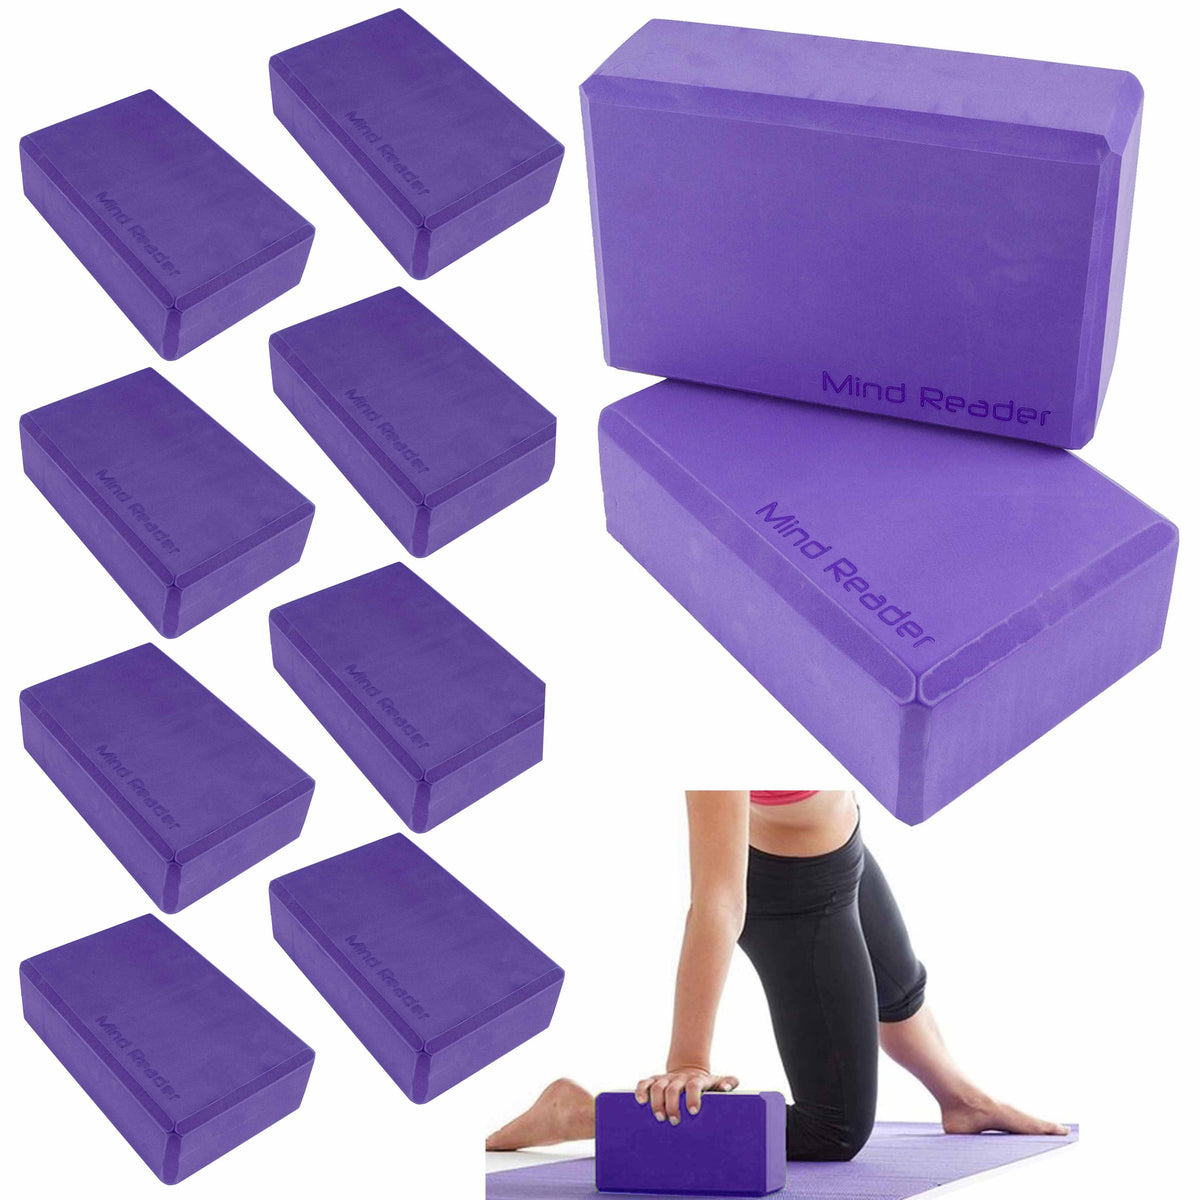 Yoga Socks Non Slip Skid Grip Sports Dance Fitness Pilates Barre